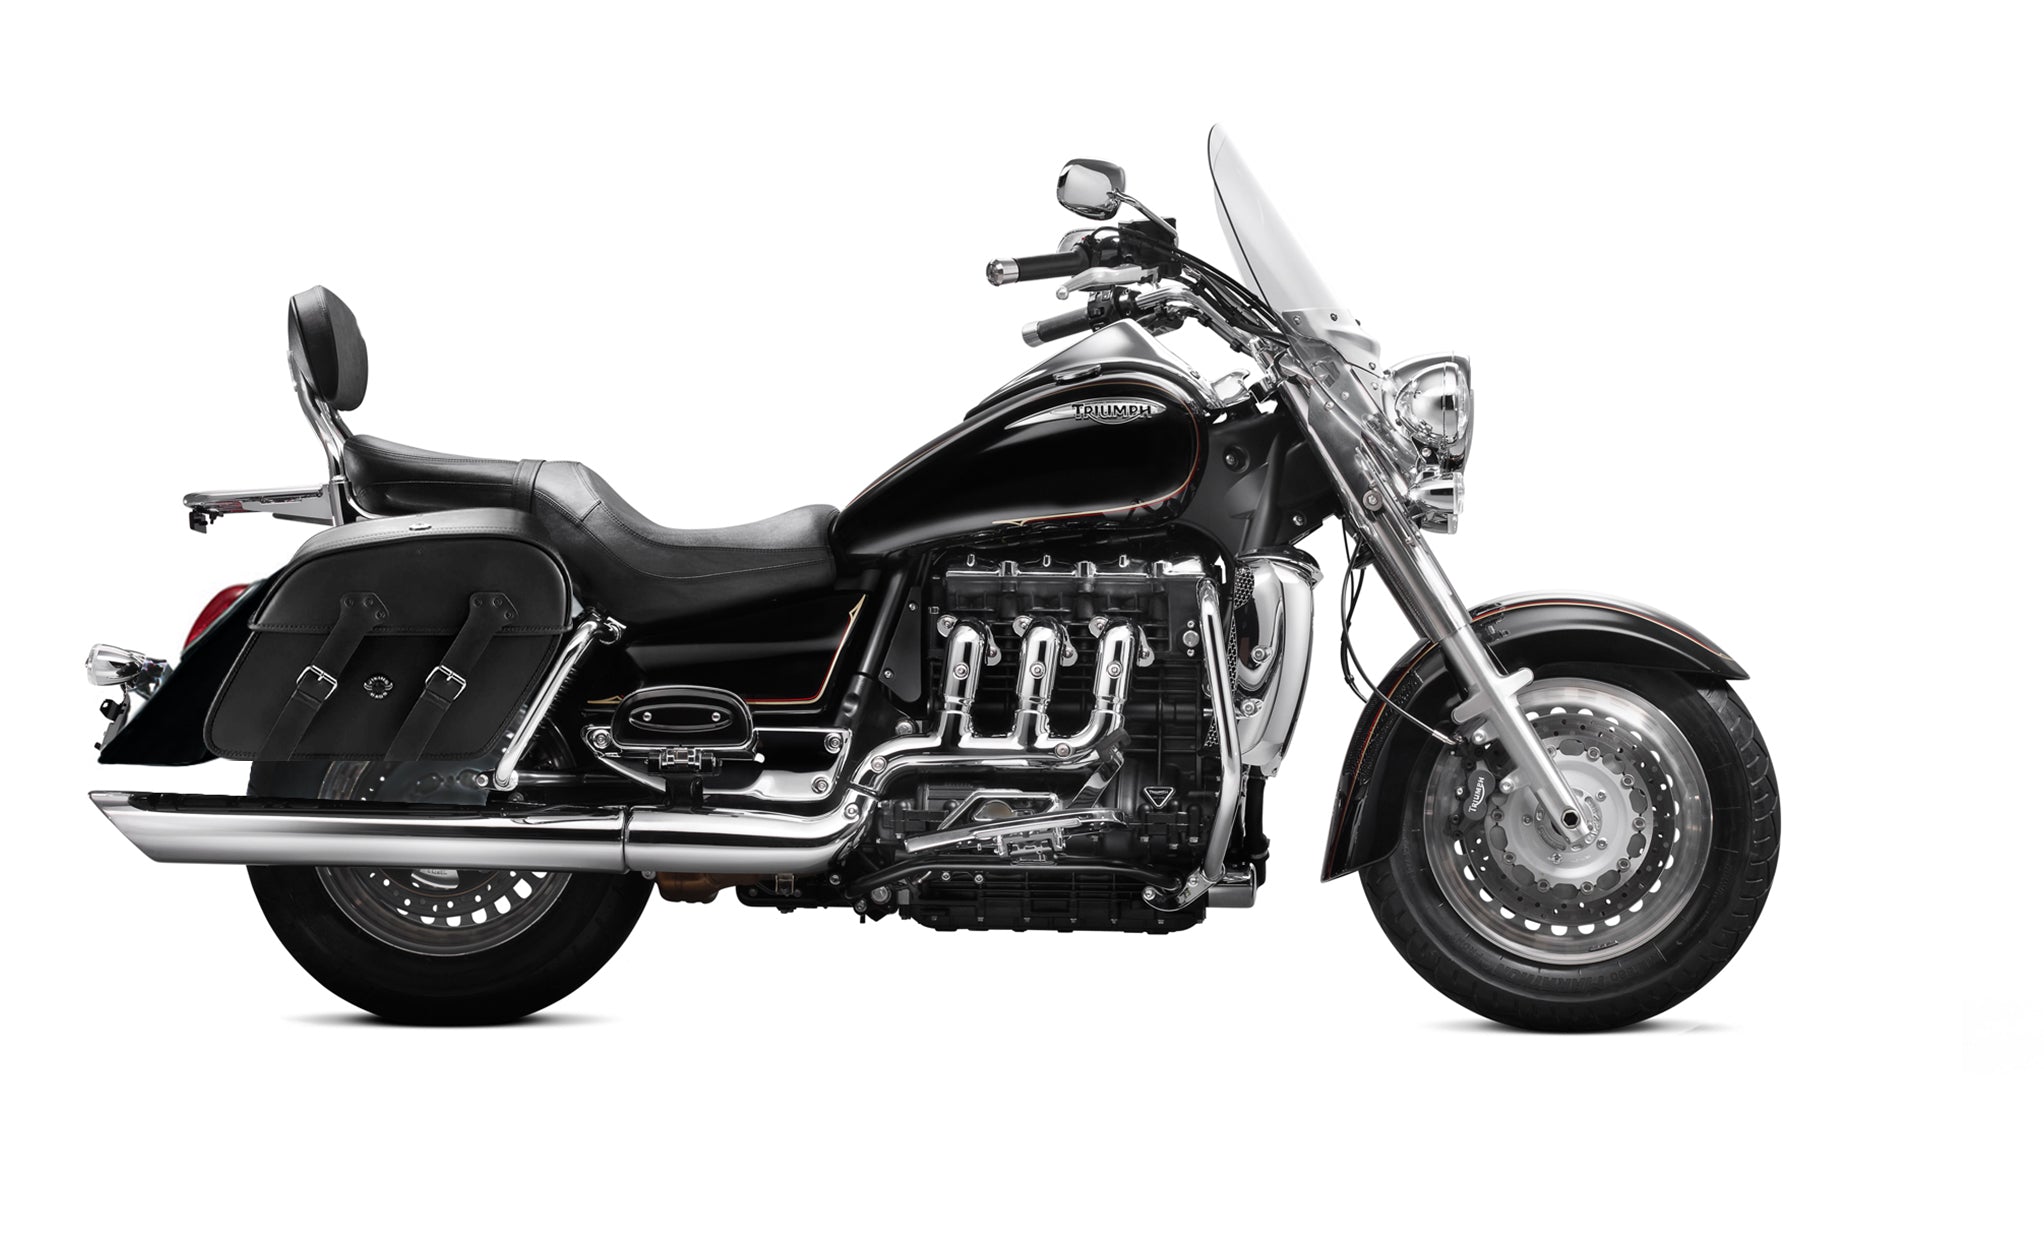 Viking Raven Large Triumph Rocket Iii Touring Motorcycle Leather Saddlebags on Bike Photo @expand